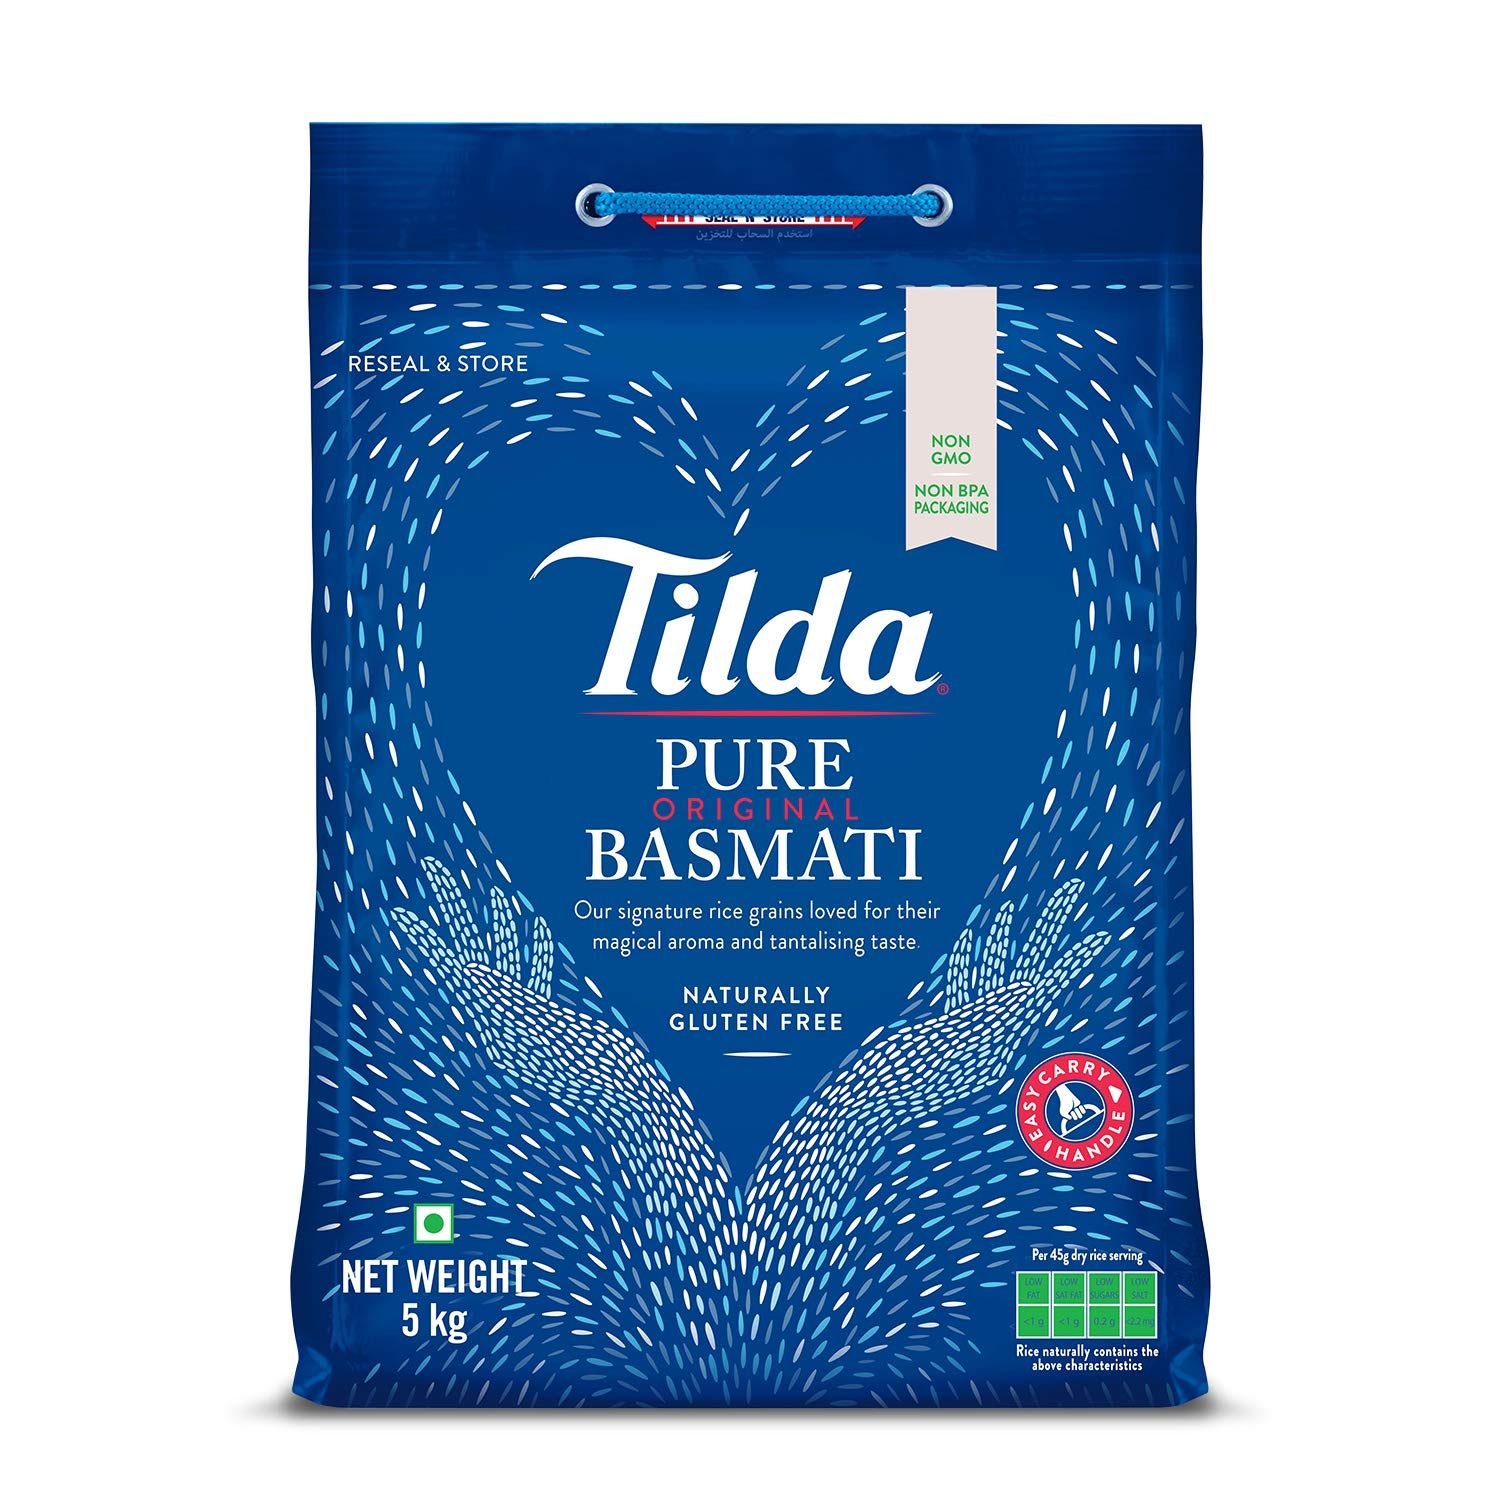 Tilda Pure Original Basmati Rice Image